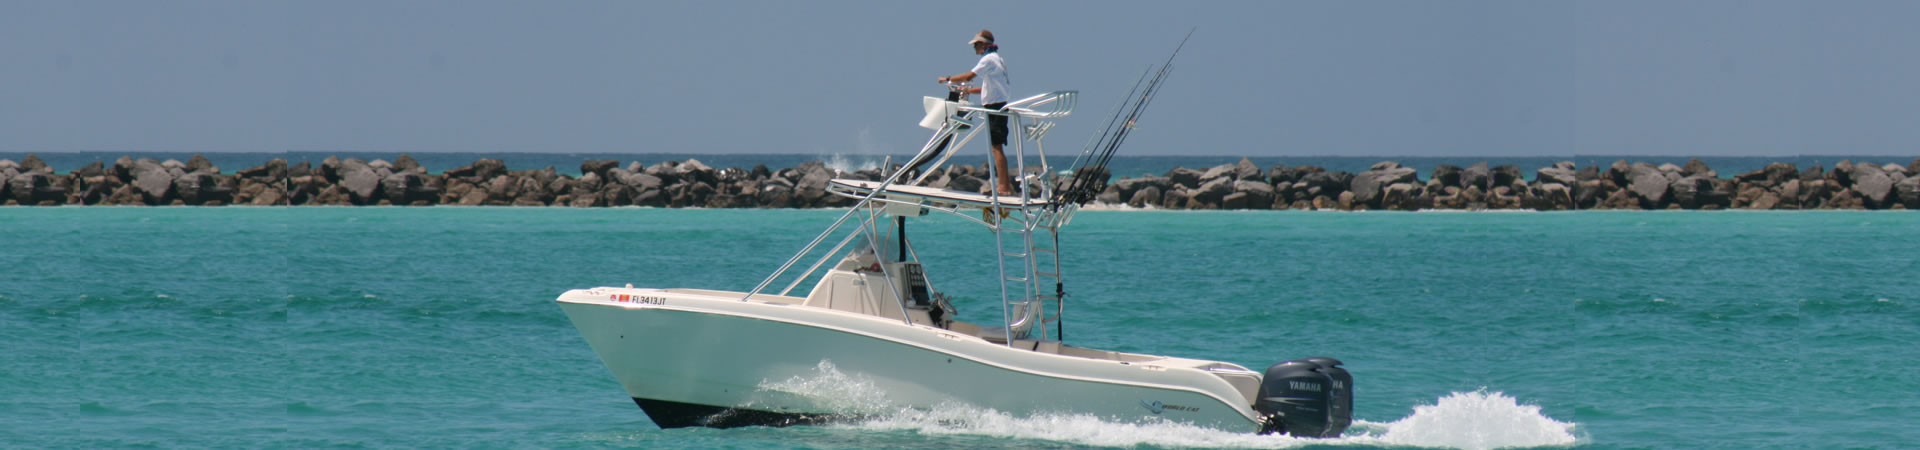 Destin Charter Boats - Destin FL Fishing Charters